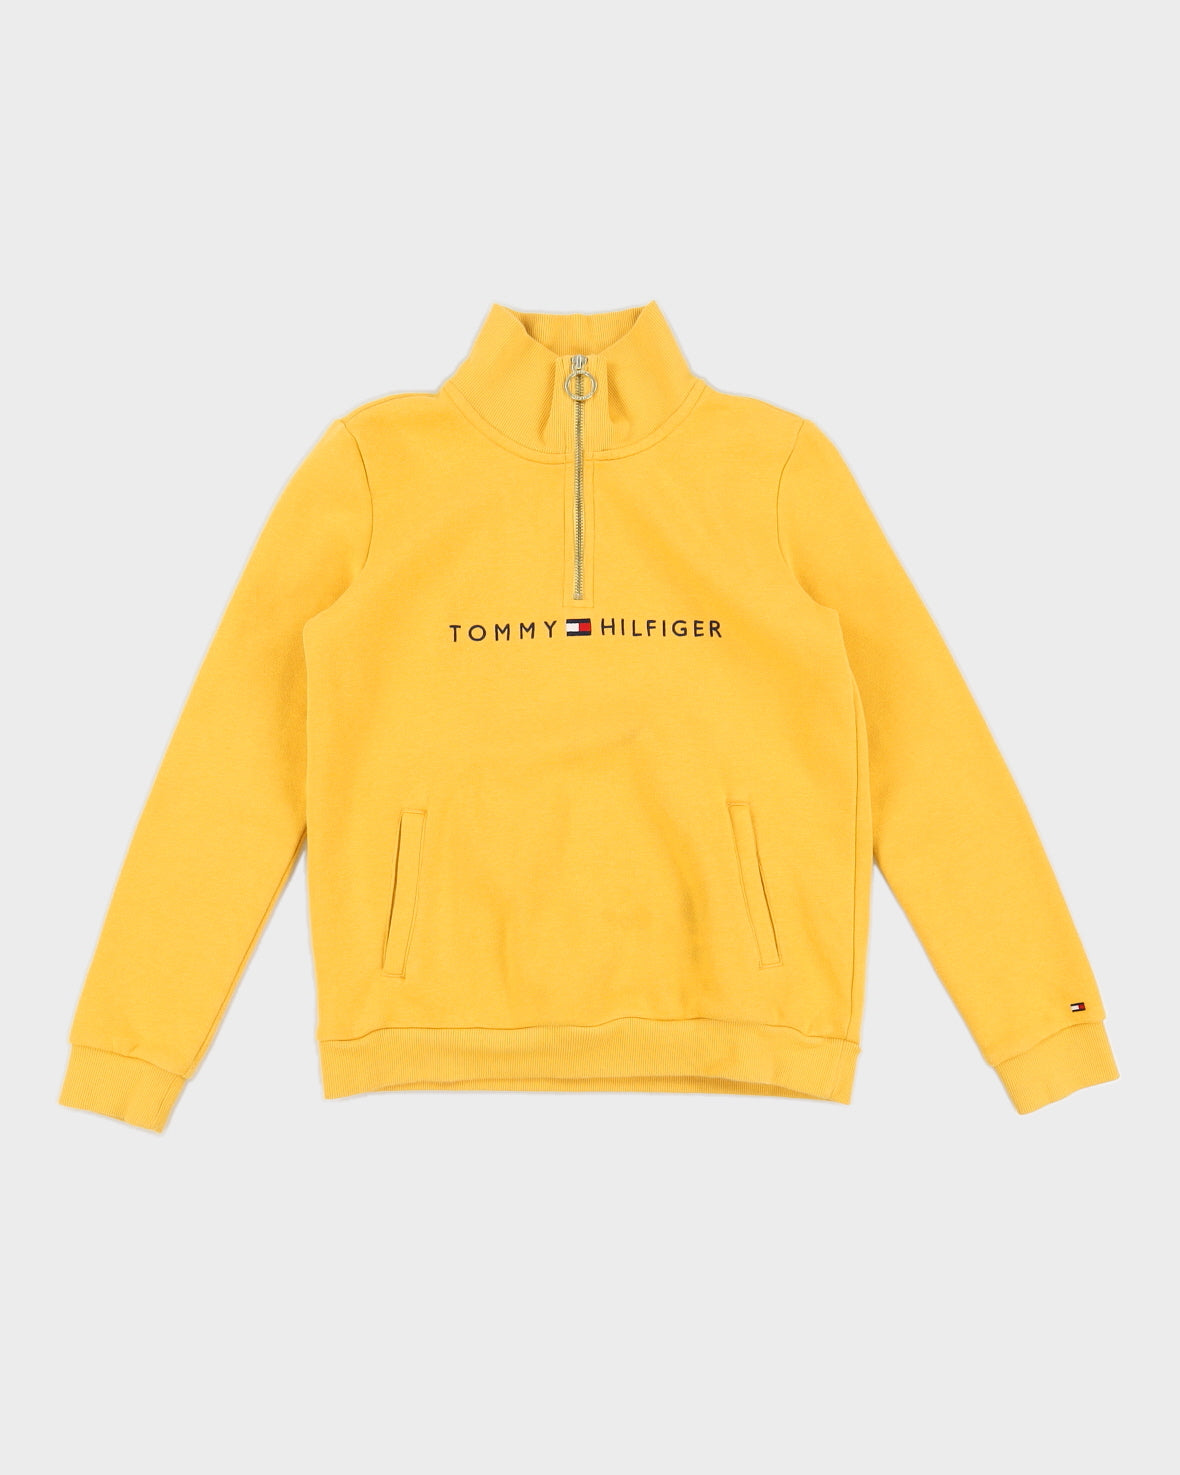 Tommy Hilfiger Yellow Quarter Zip Sweatshirt - XS